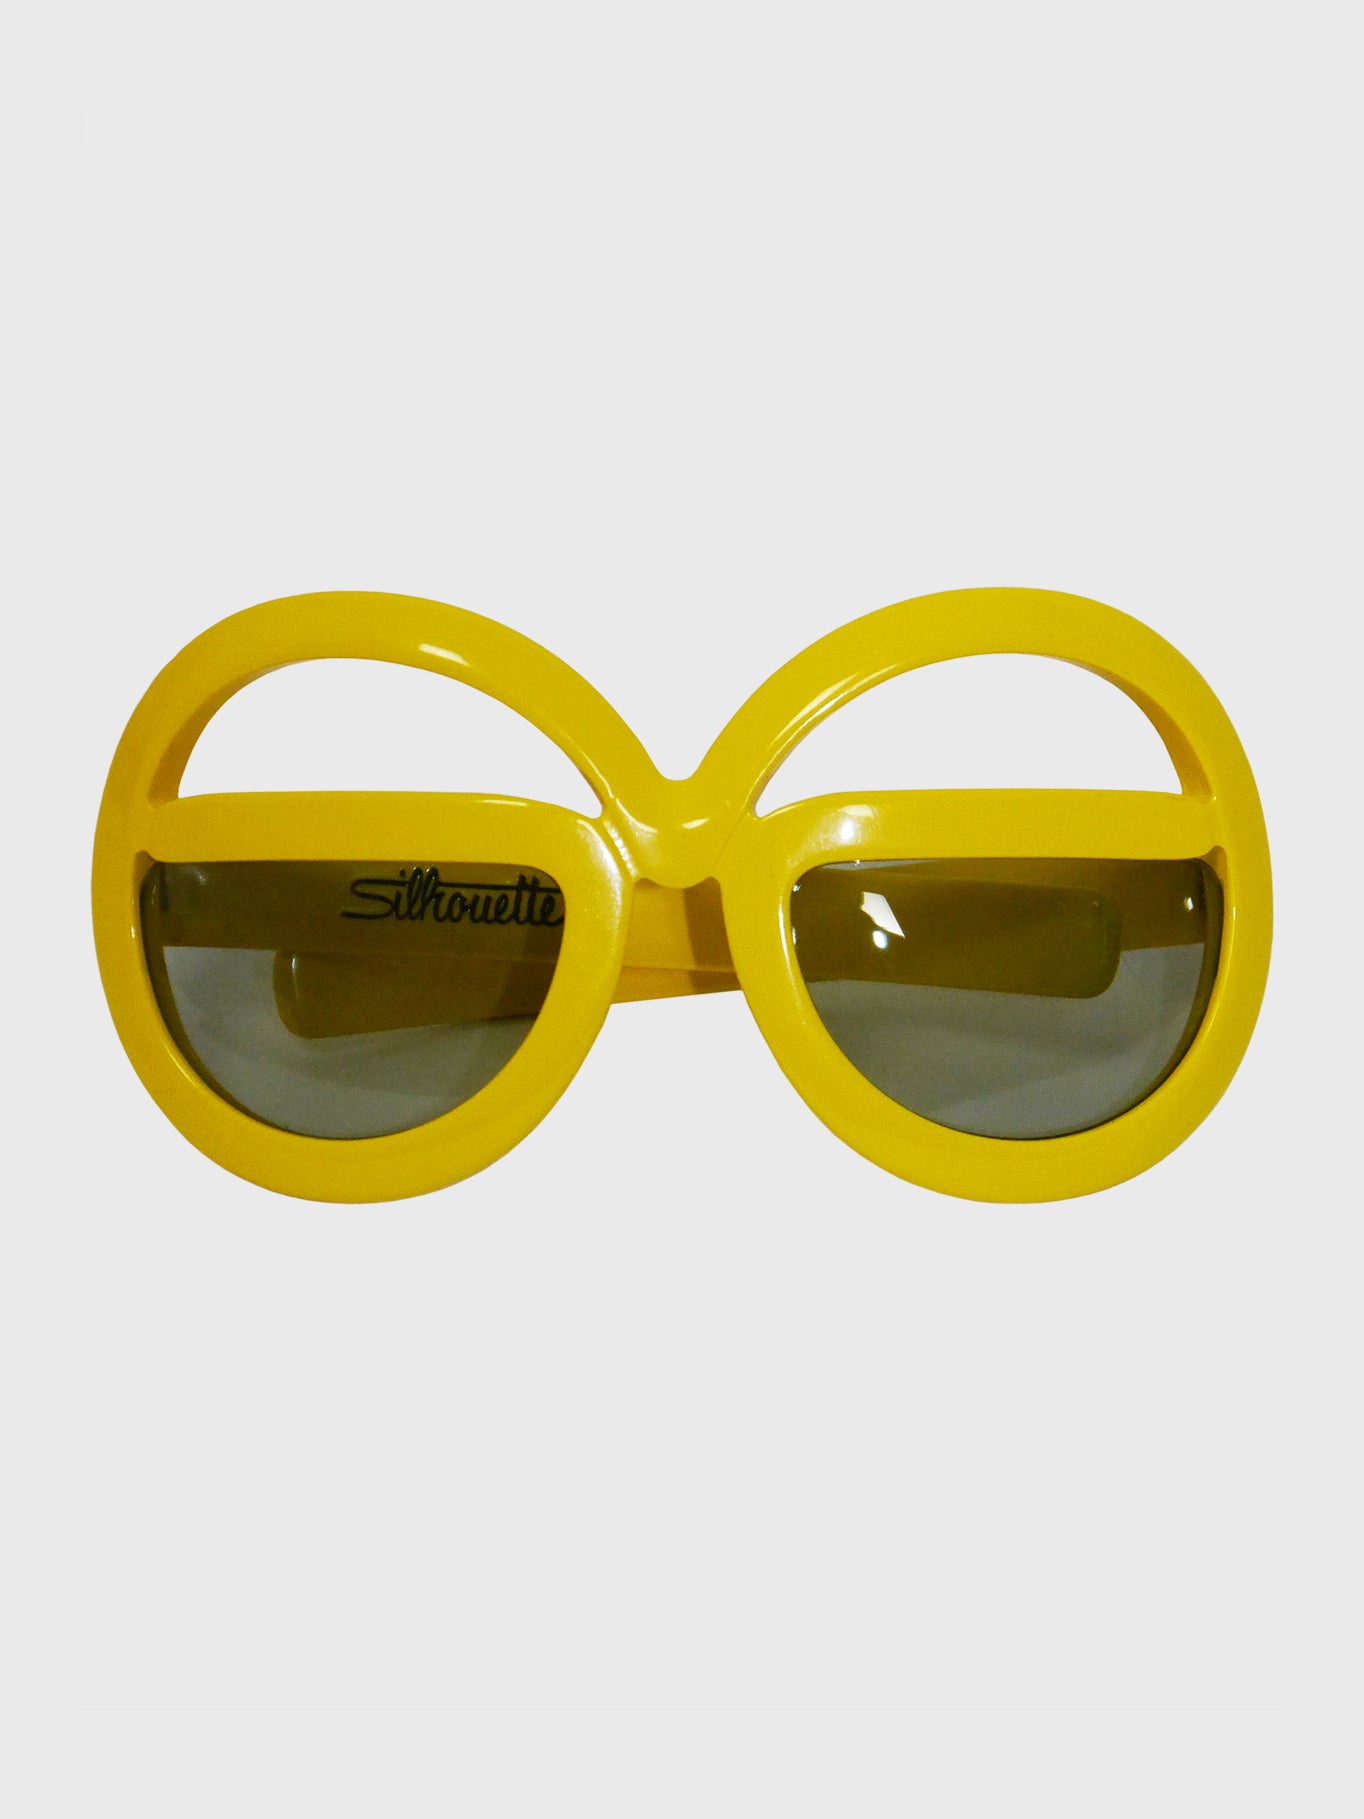 SILHOUETTE Futura 562 c. 1973 Vintage Oversized Sunglasses Yellow